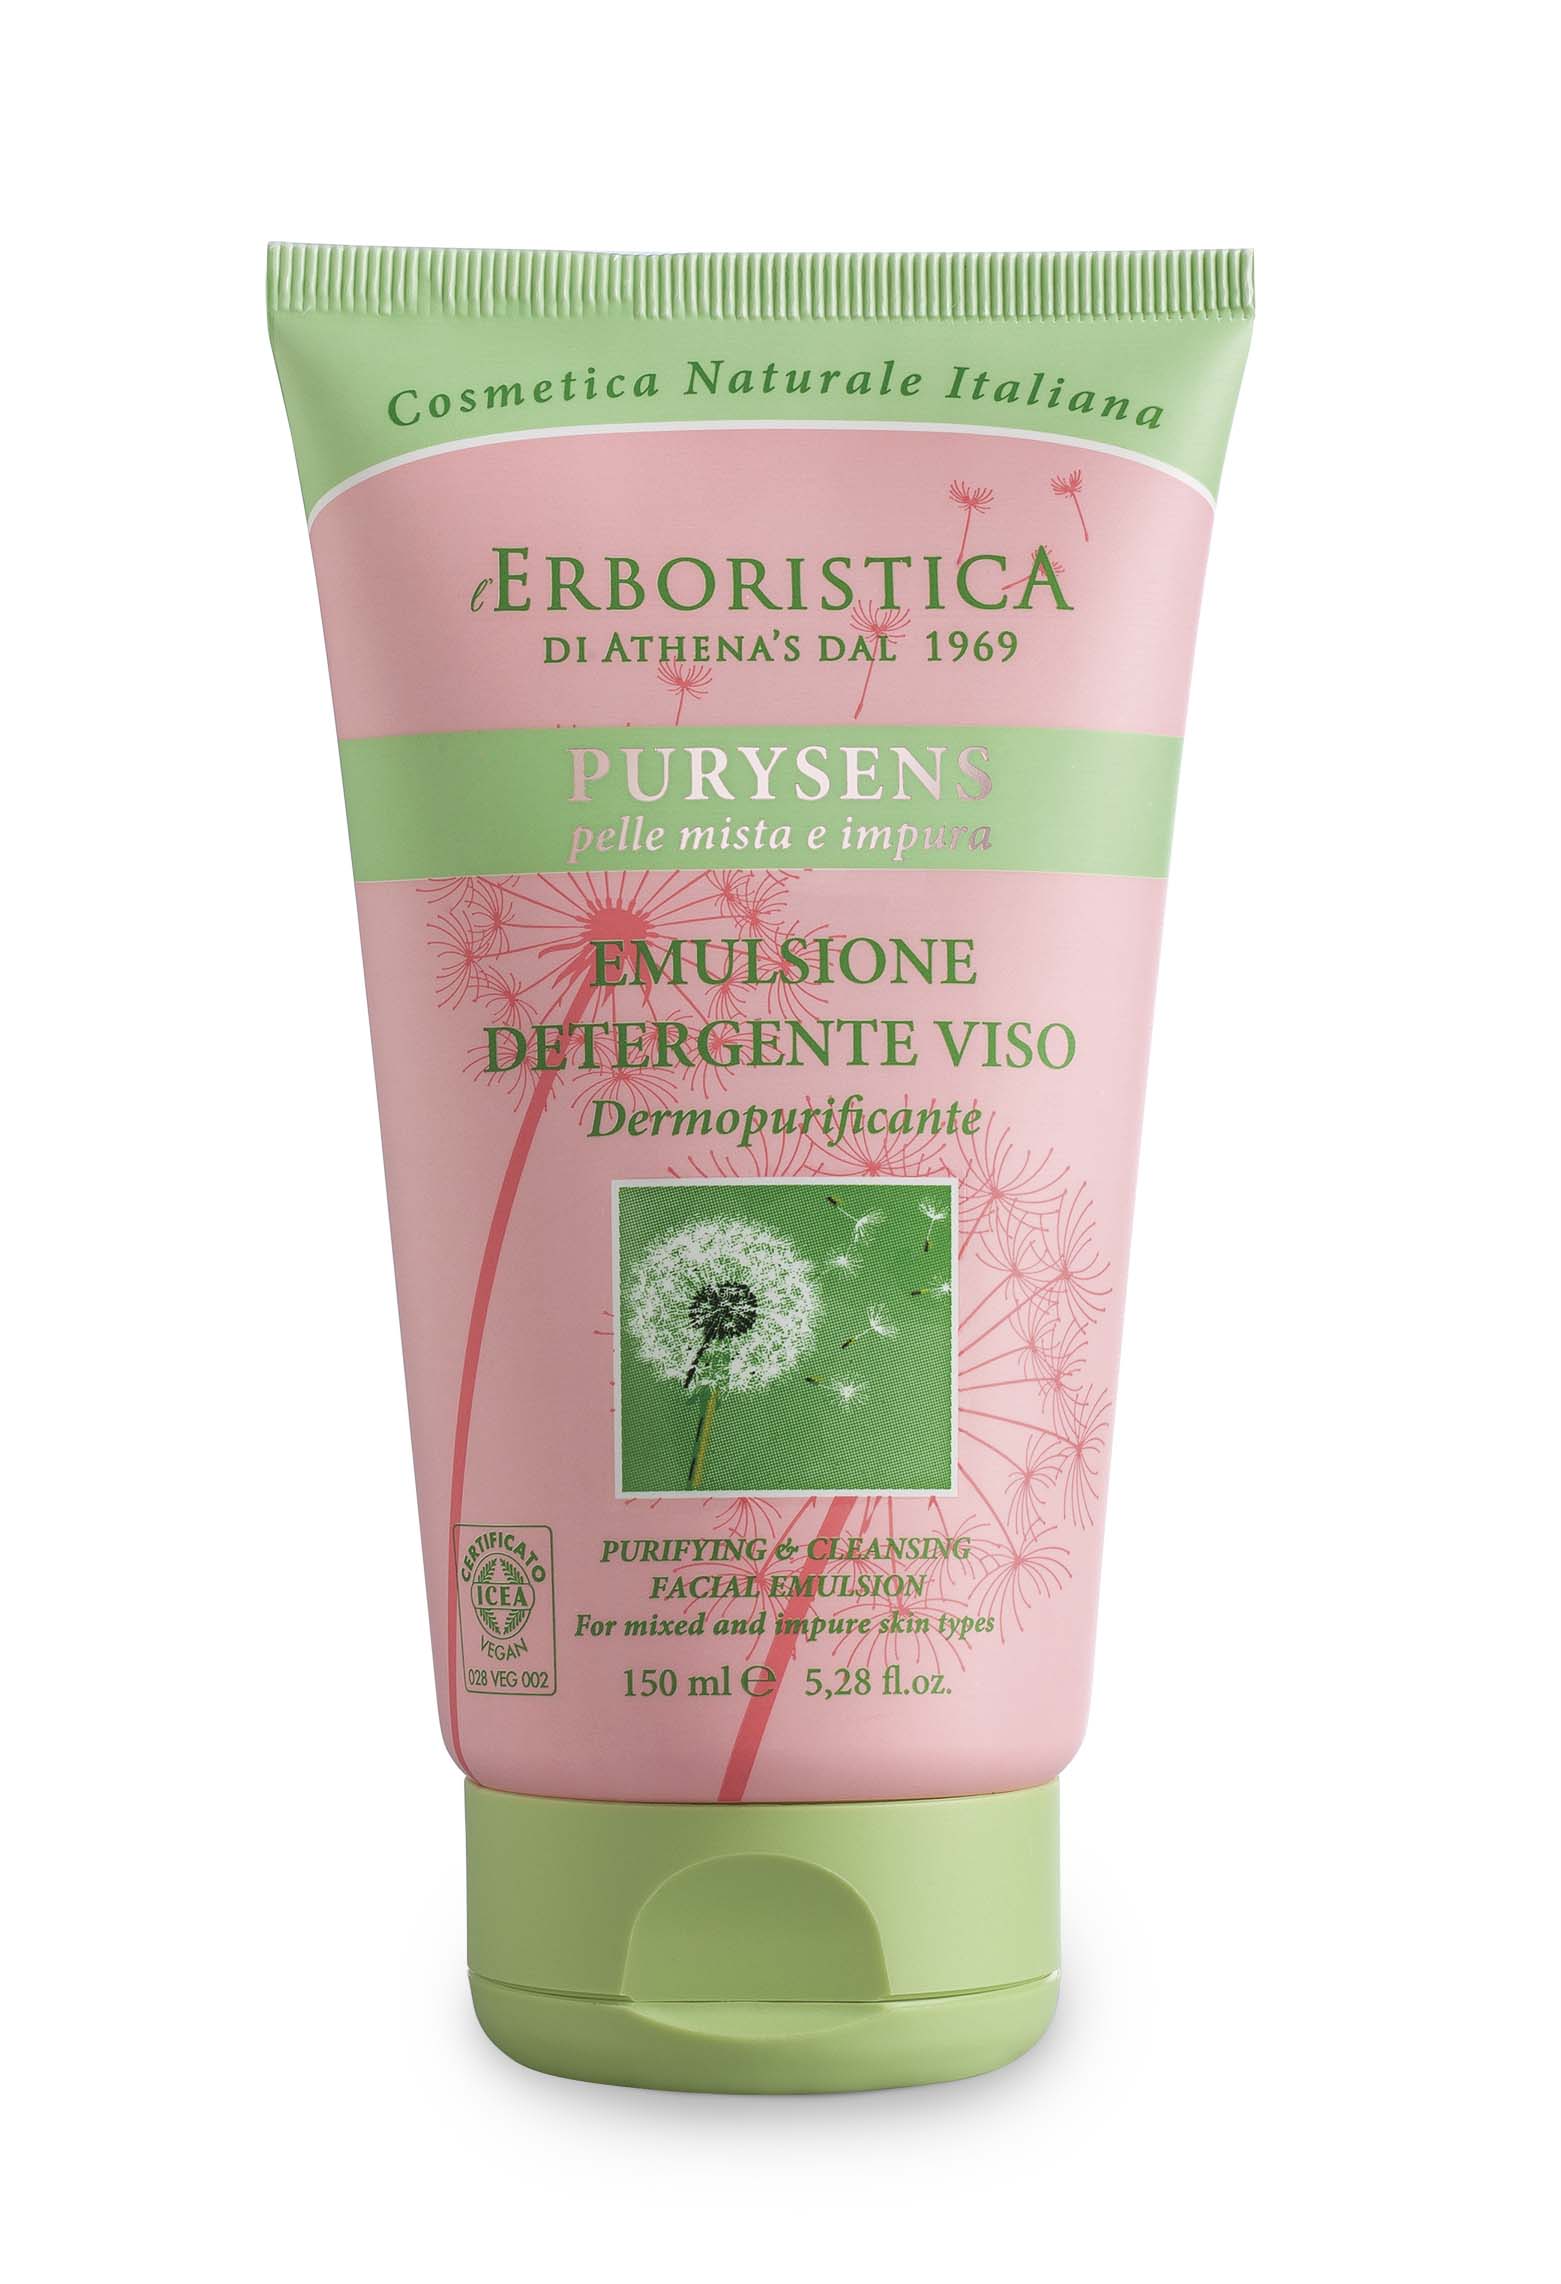 Erboristica Purysens Purifying & Cleansing Facial Emulsion 150ml